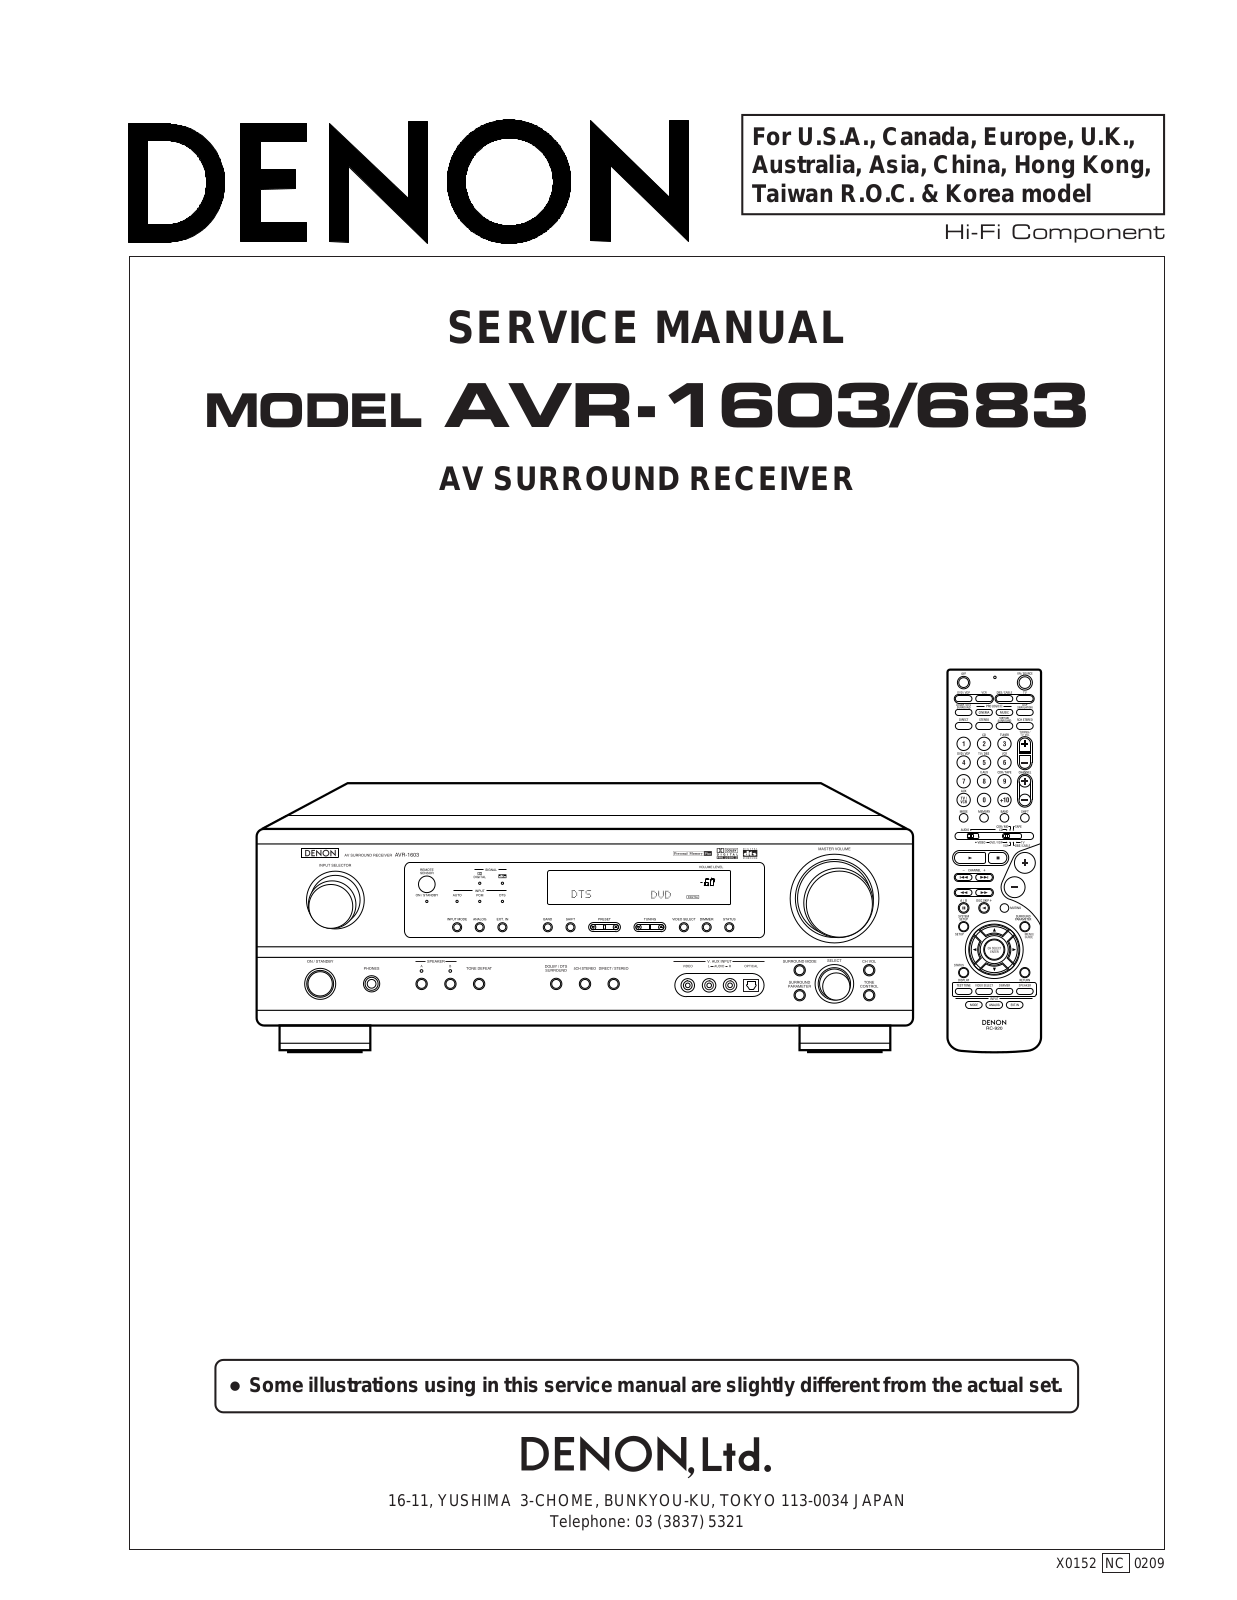 Denon AVR-1603 Service Manual